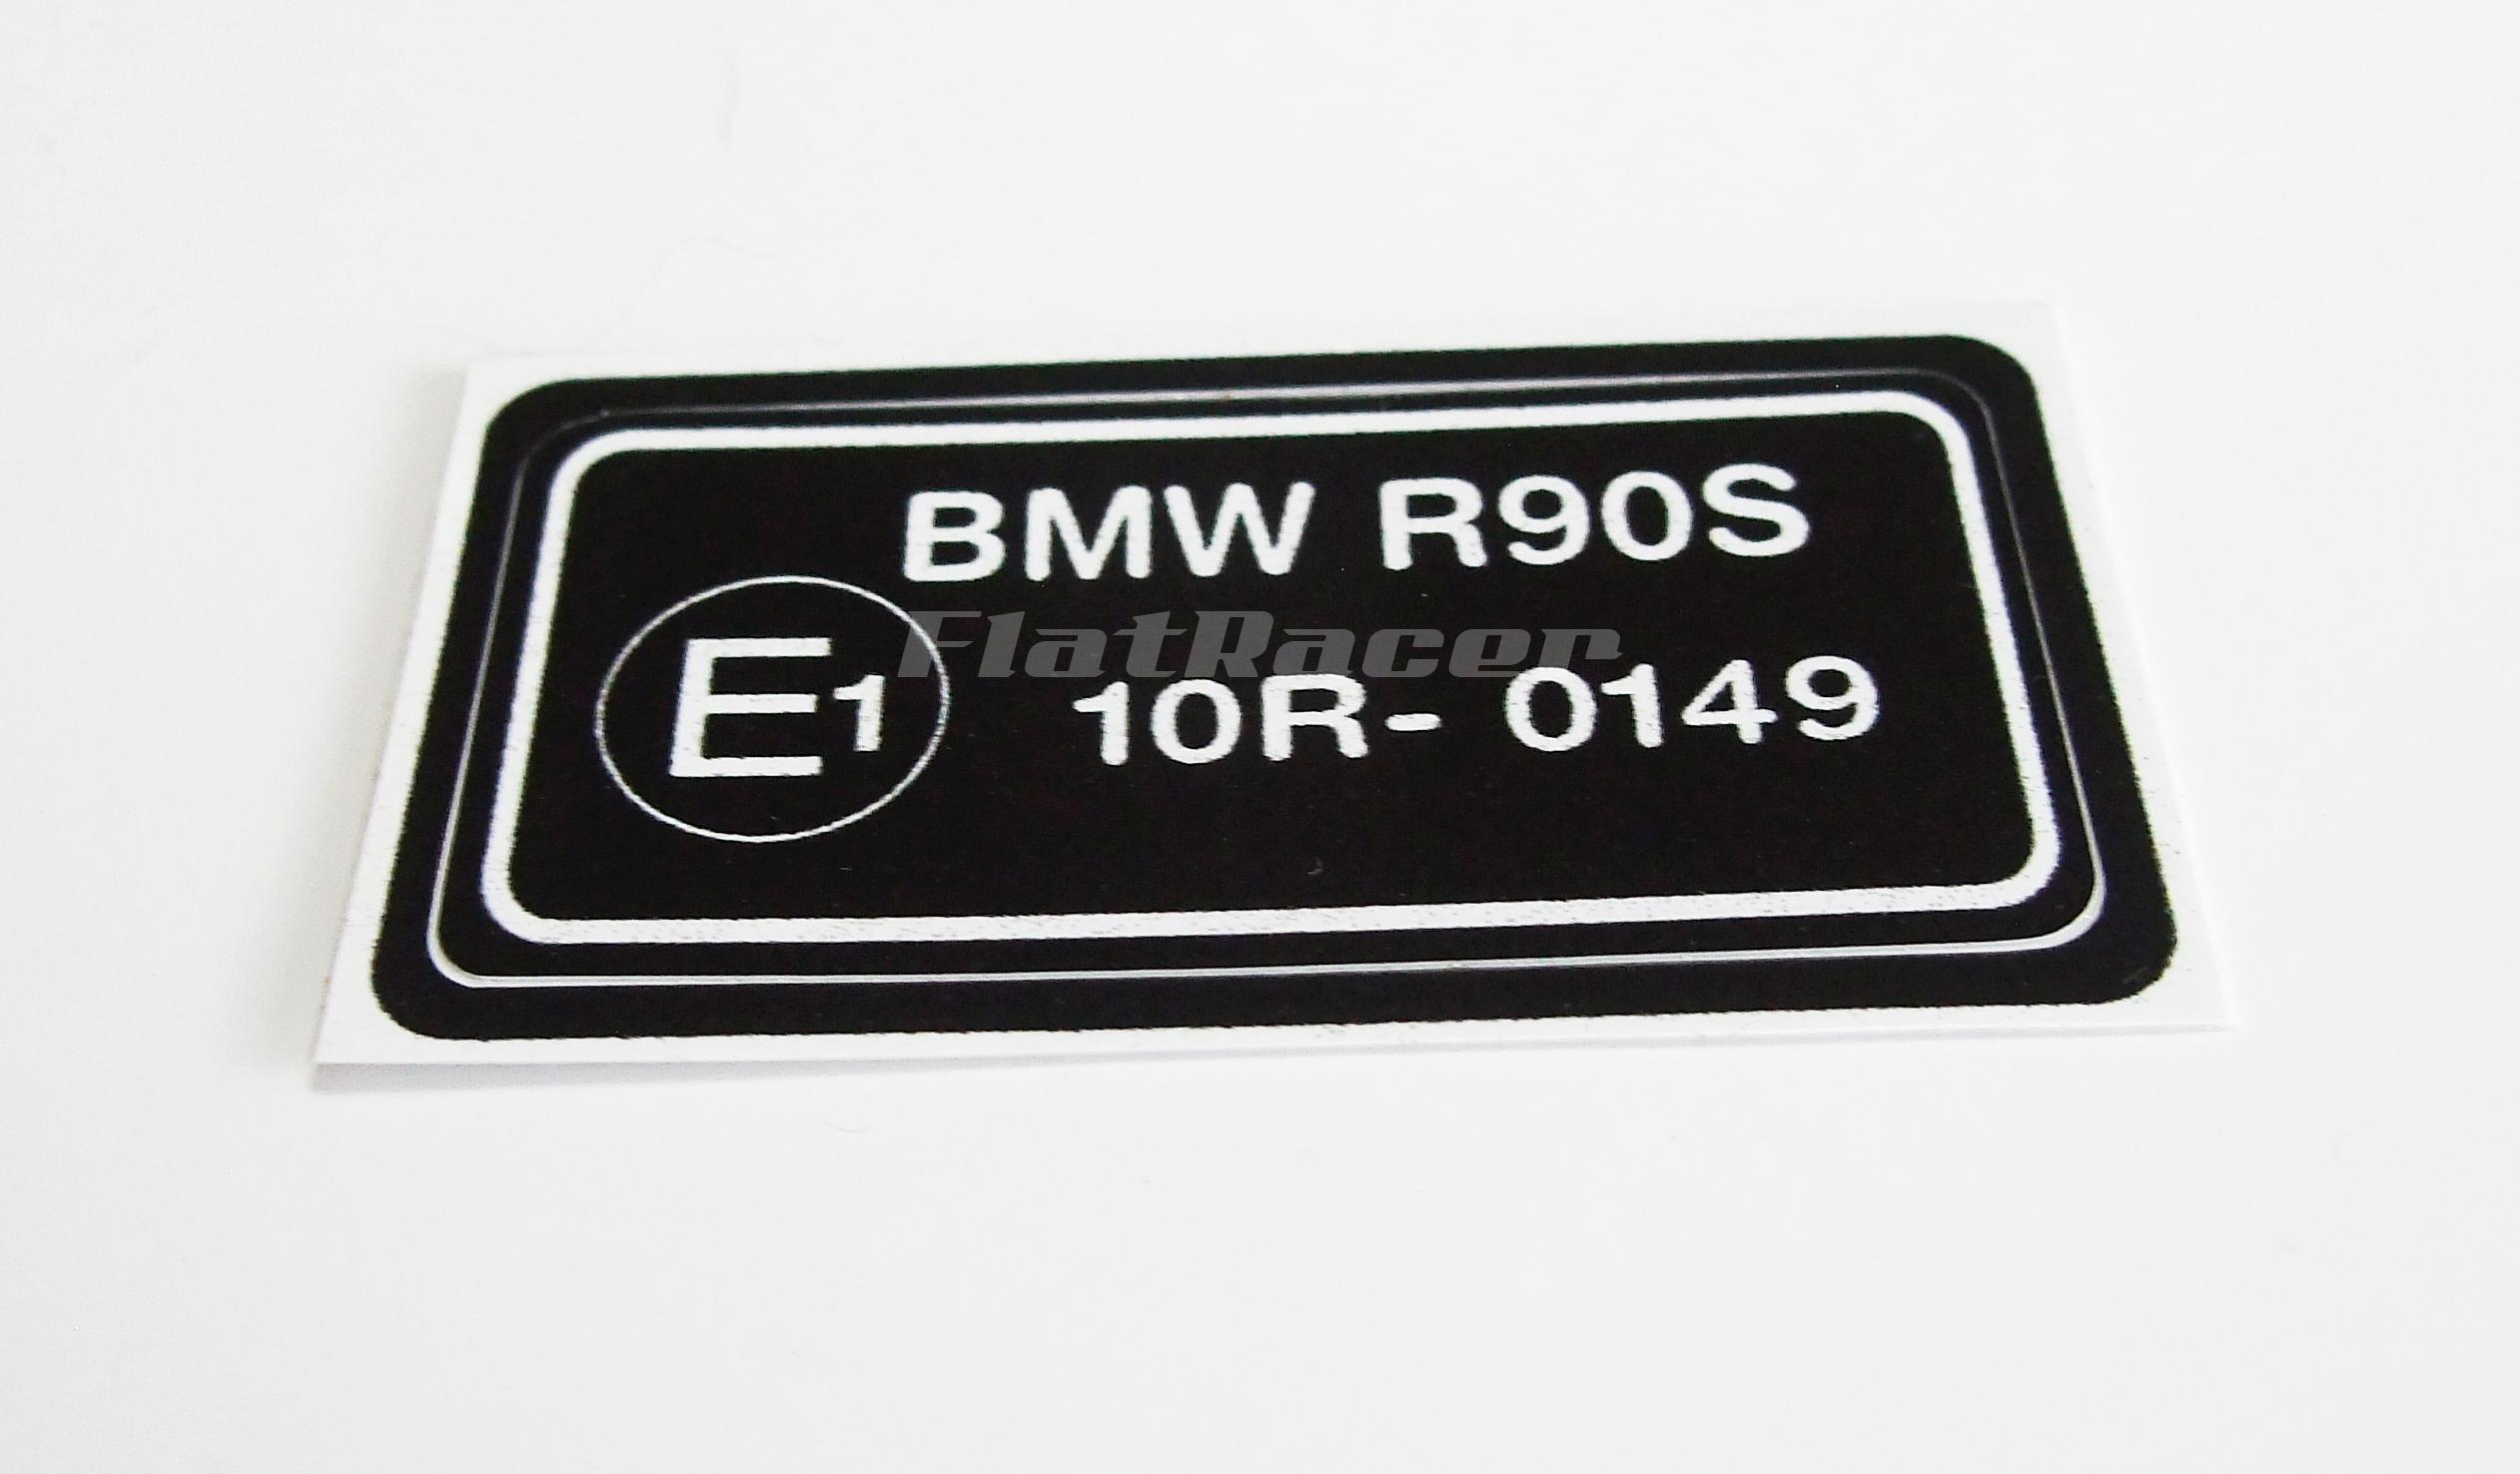 BMW R90S E1 Homologation black sticker - 10R-0149